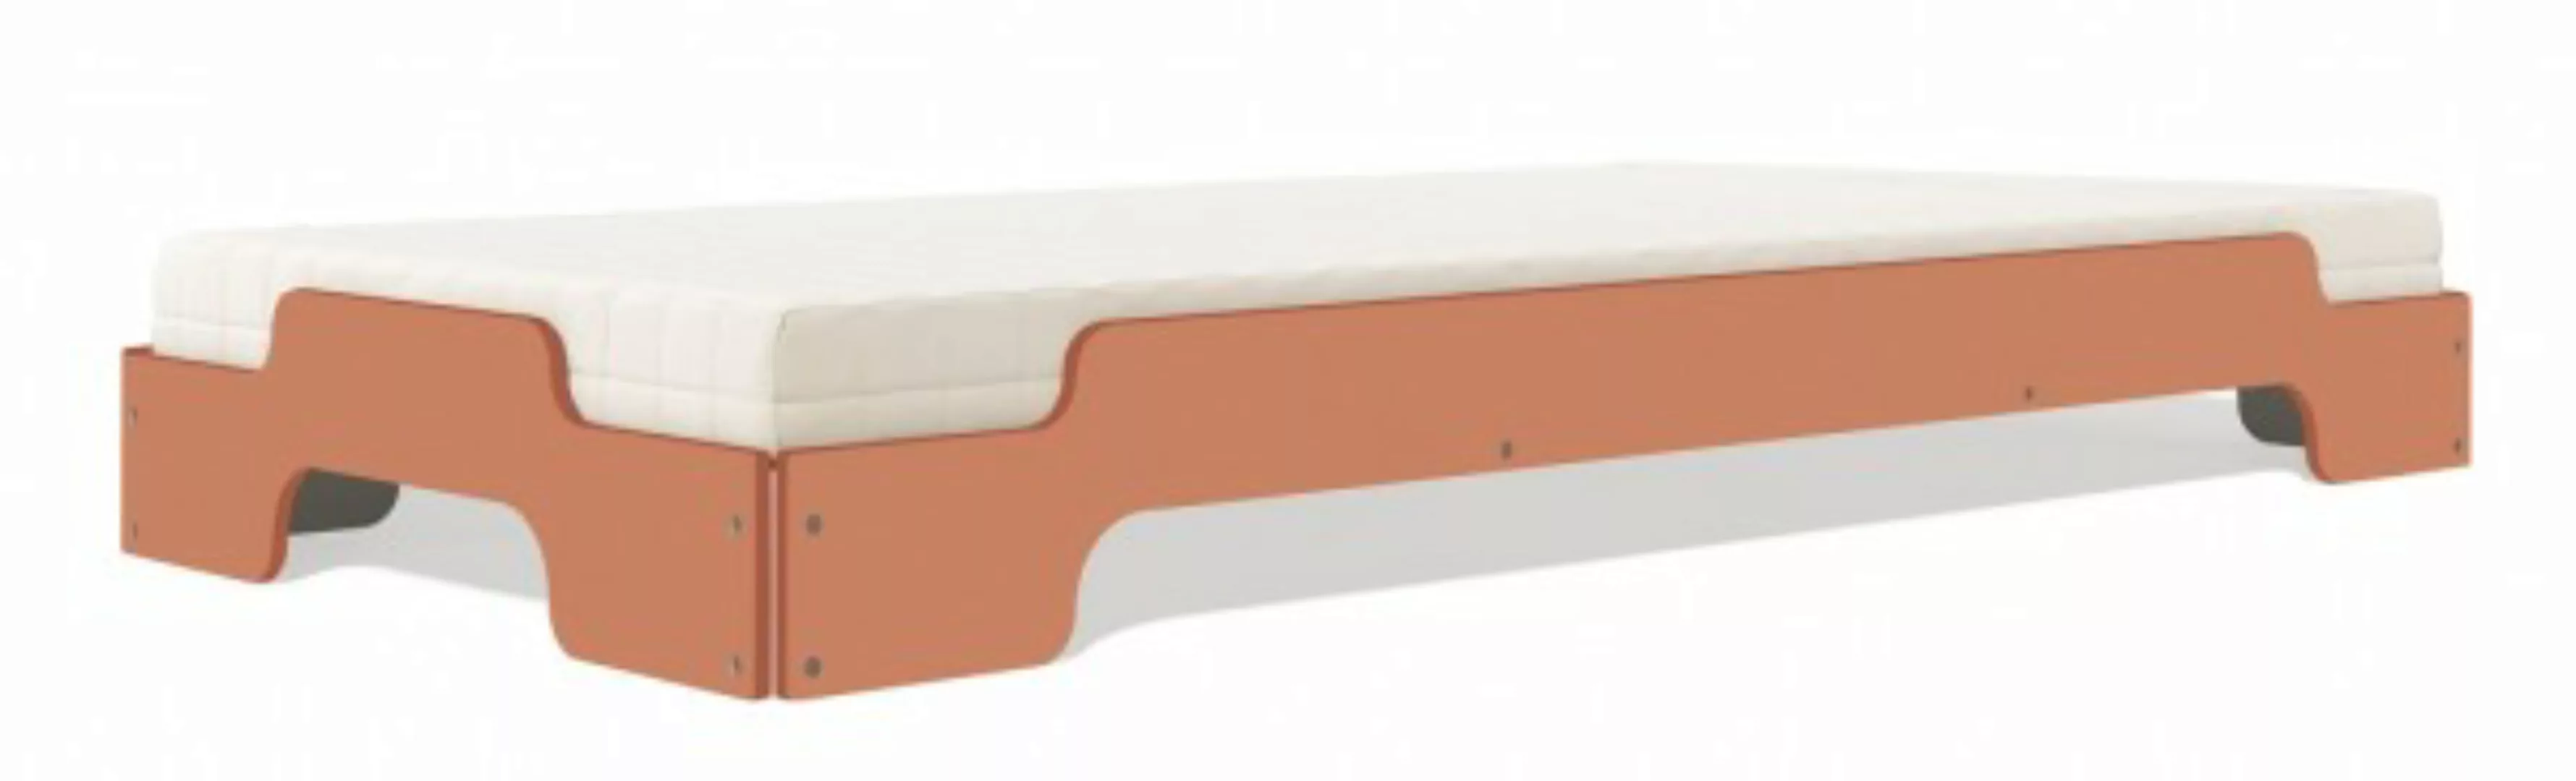 Stapelliege KLASSIK - Farbig apricotbraun RAL 050 60 40 90 x 190 cm günstig online kaufen